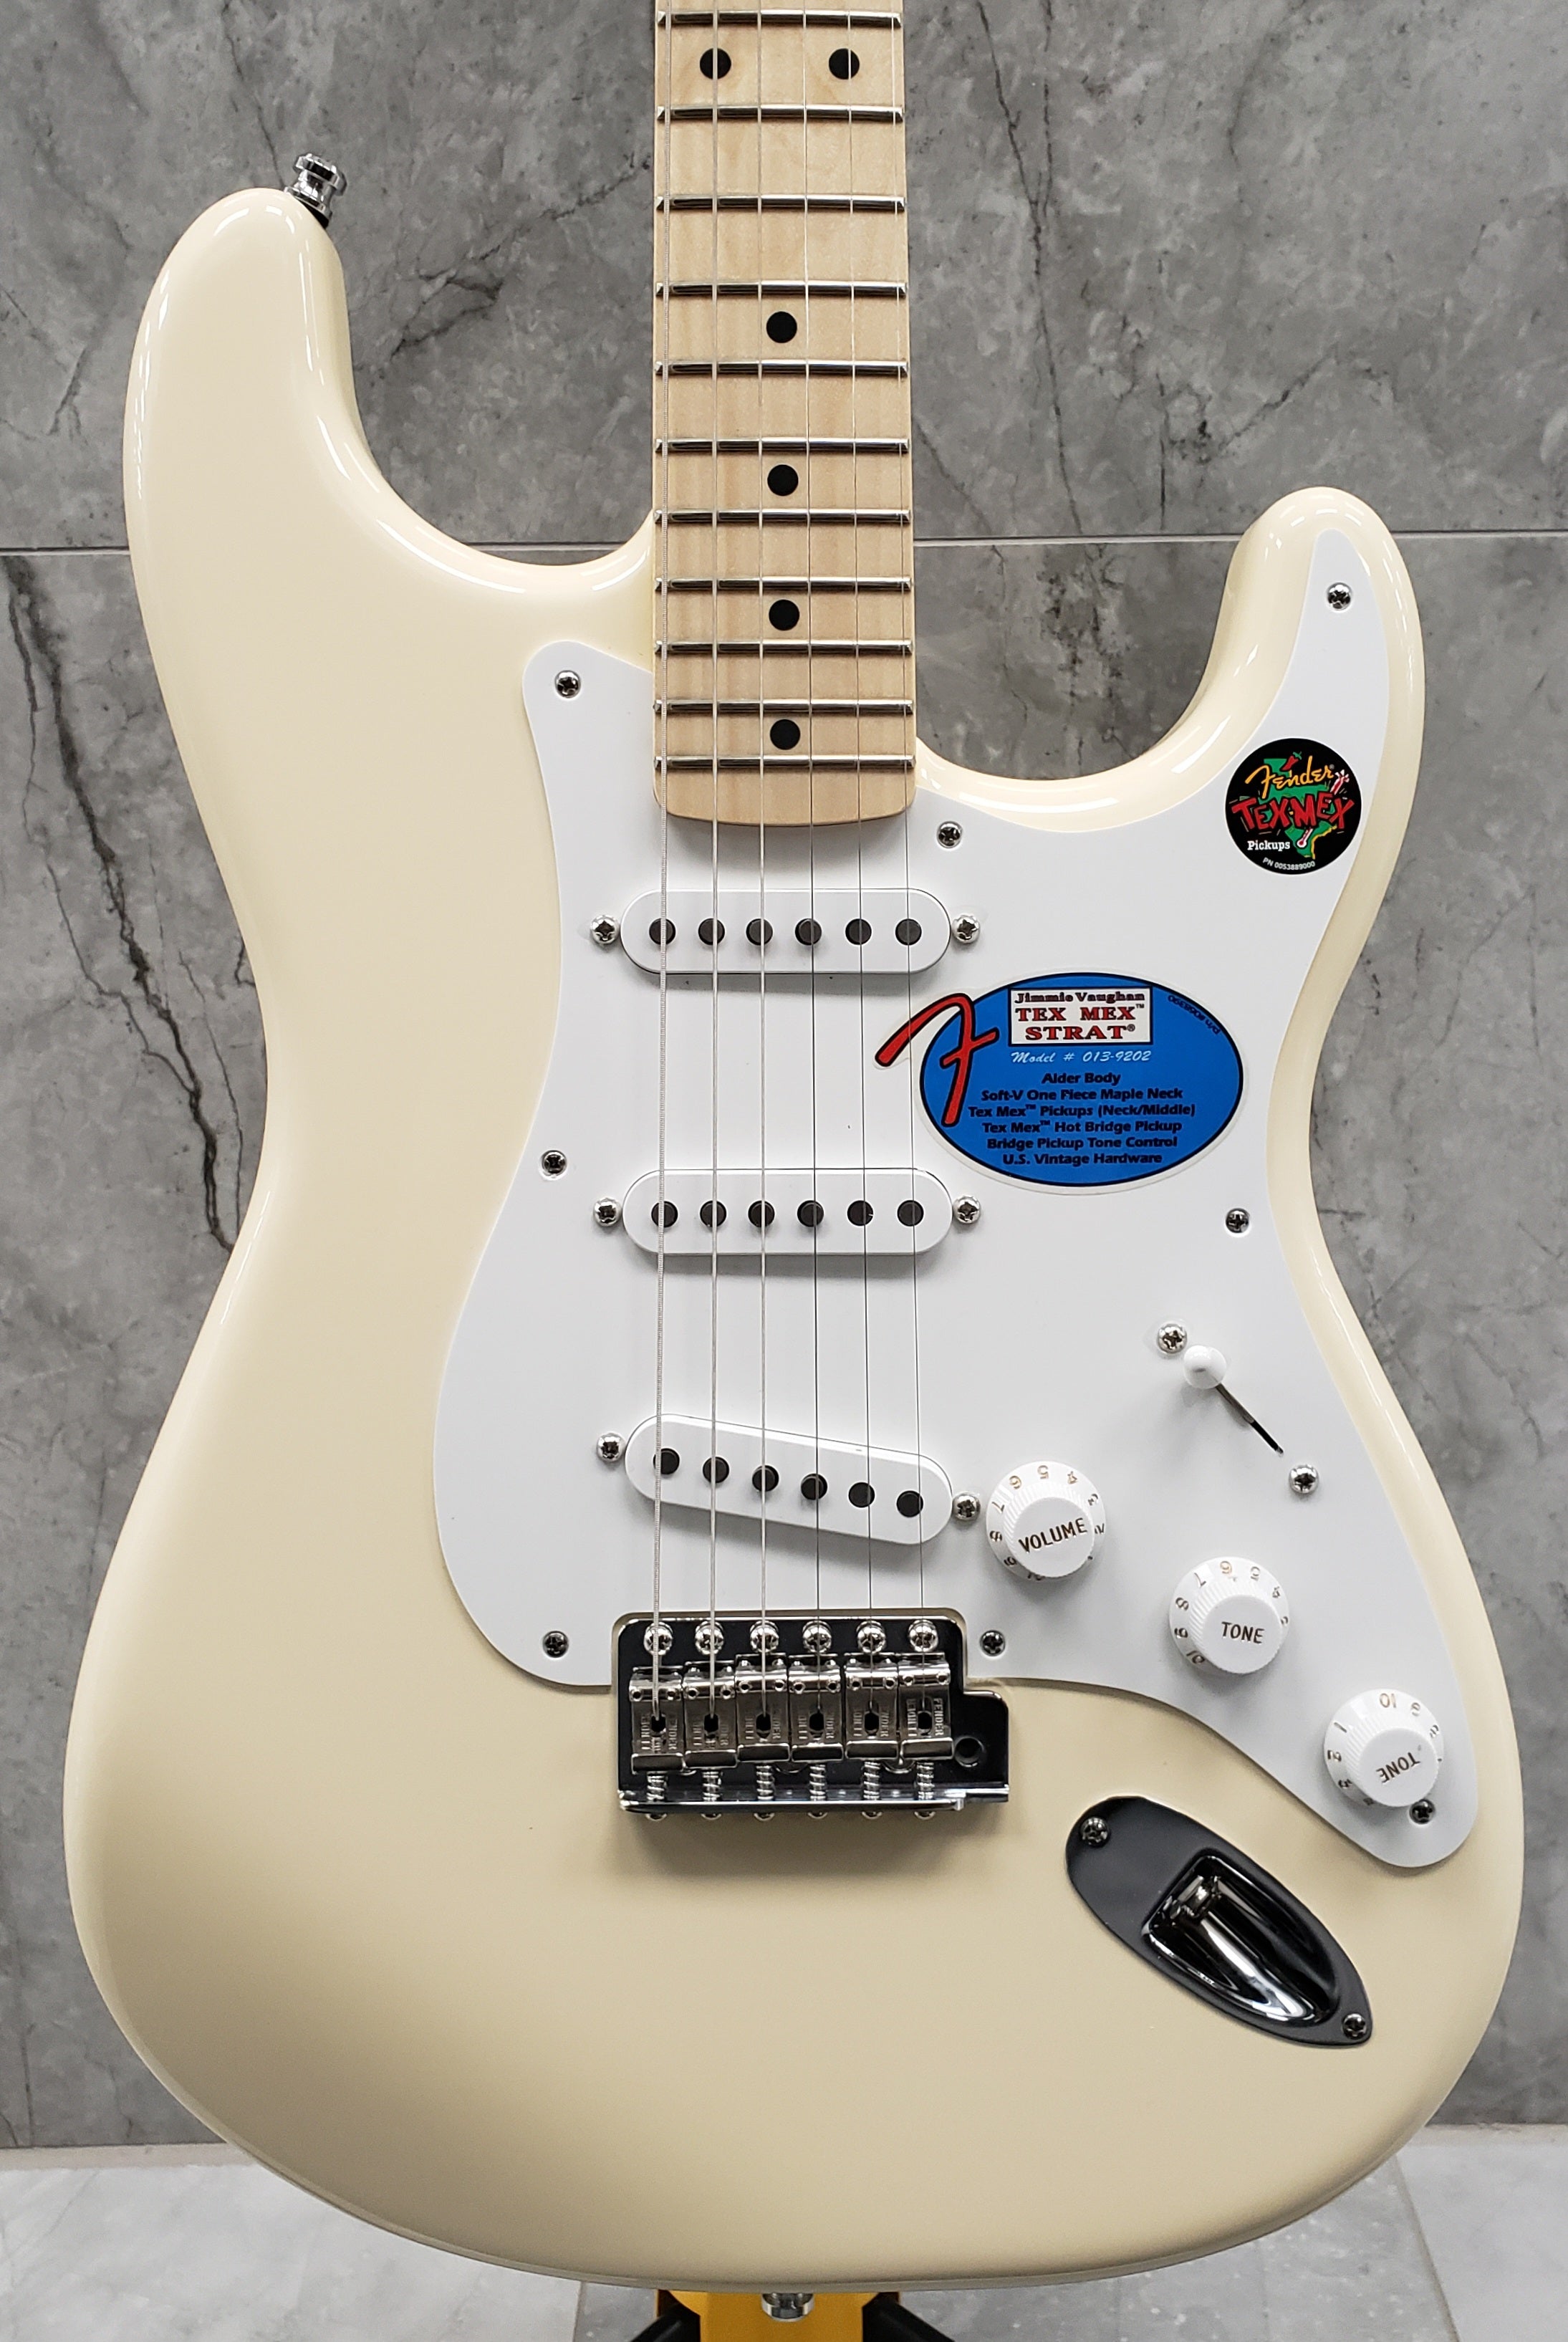 Fender Jimmie Vaughan Tex-Mex Strat, Maple Fingerboard, Olympic White  0139202305 SERIAL NUMBER MX22133447 - 8.0 LBS